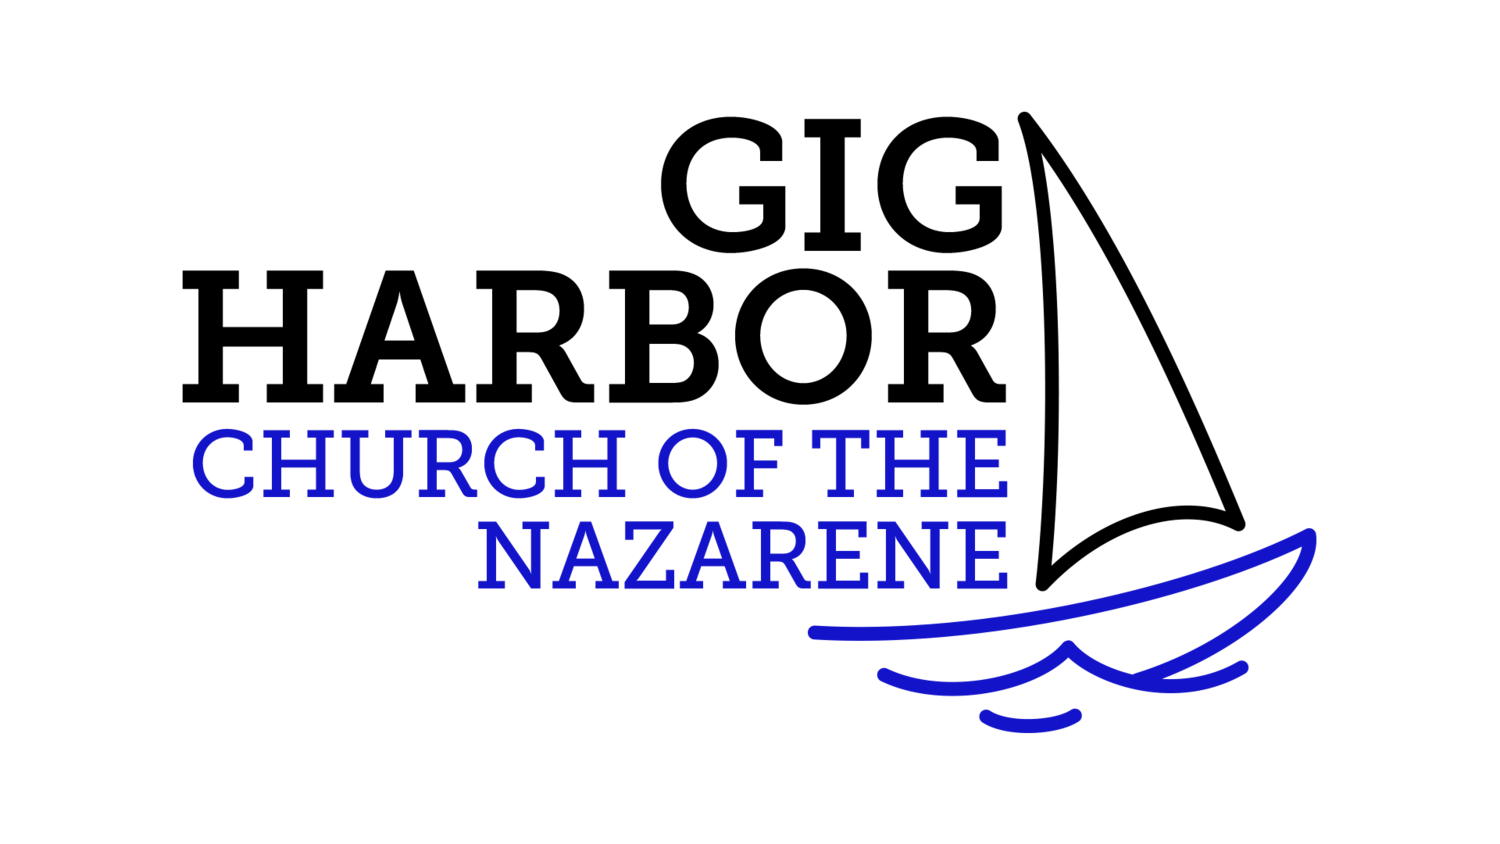 Gig Harbor Church of the Nazarene